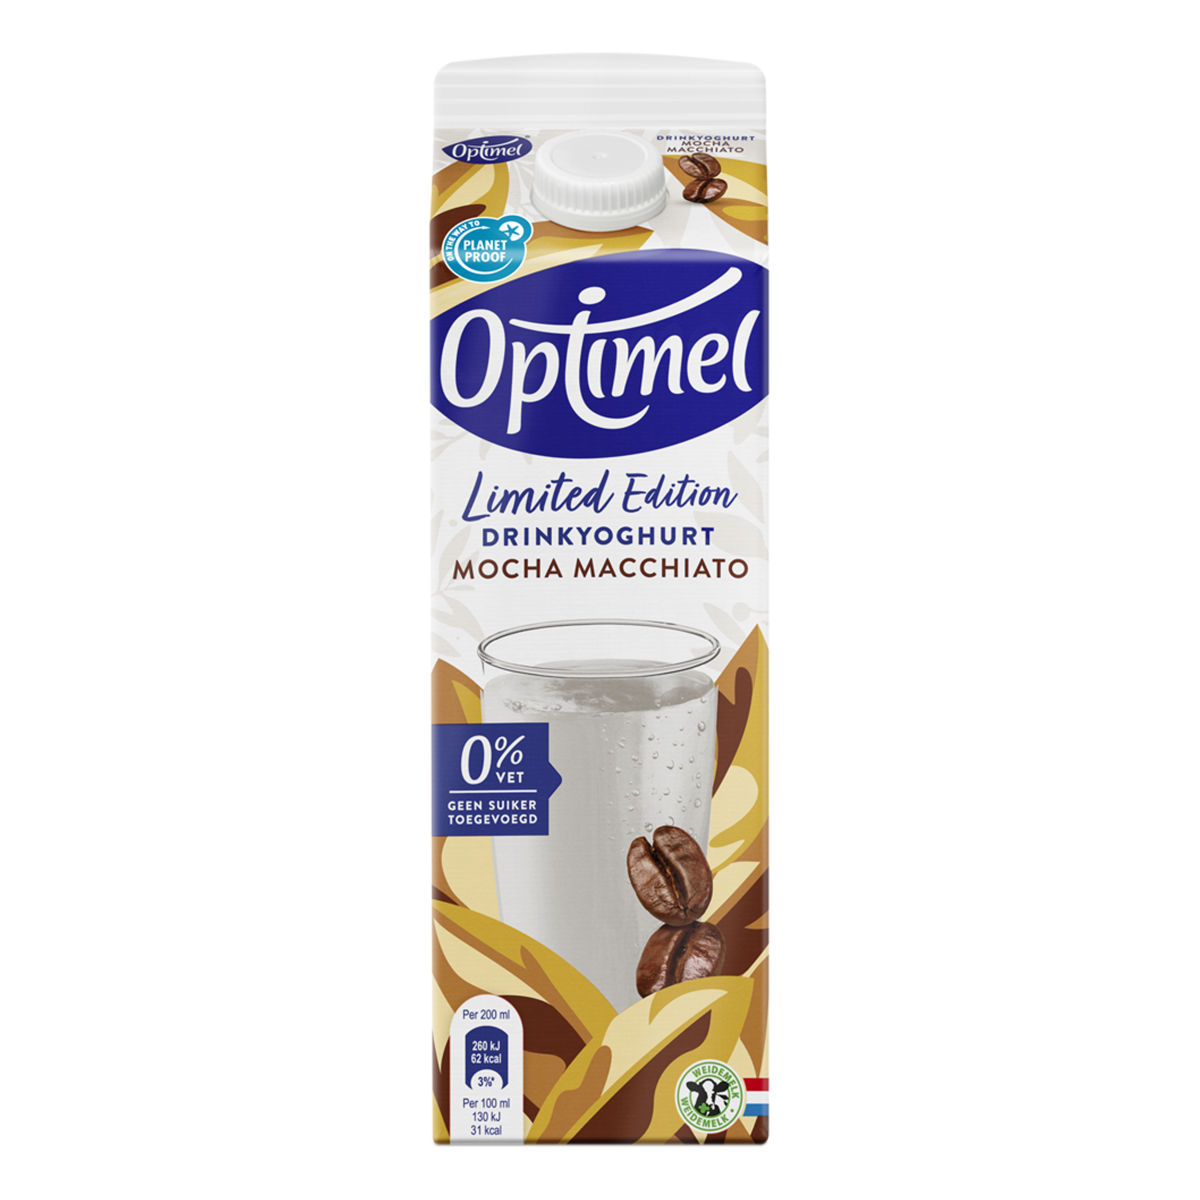 Optimel Drinkyoghurt limited edition Mocha Macchiato 0% vet 1L